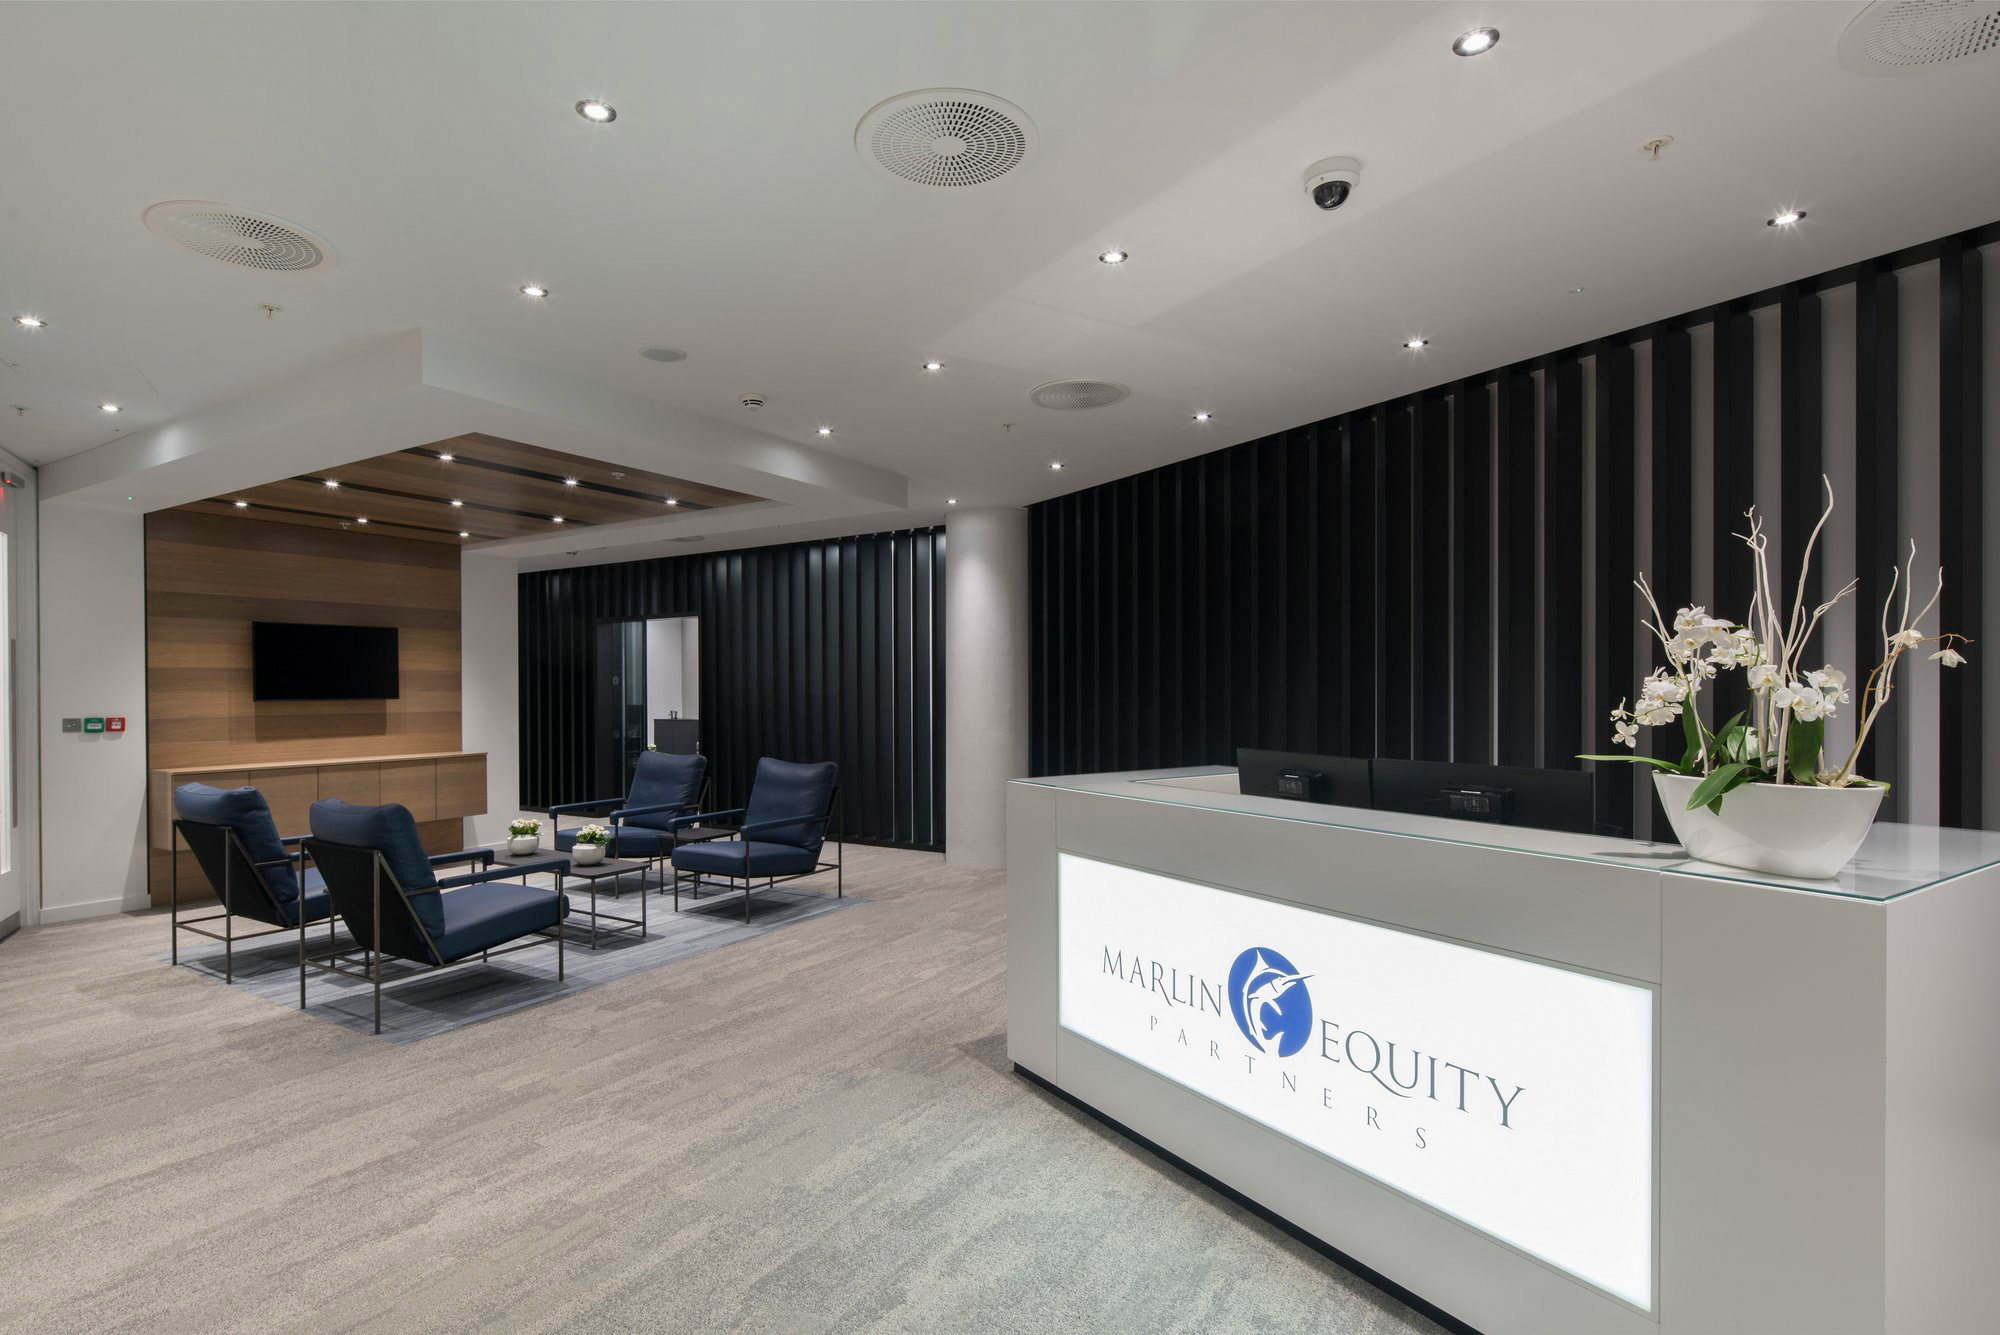 Marlin Equity office design | Office Snapshots